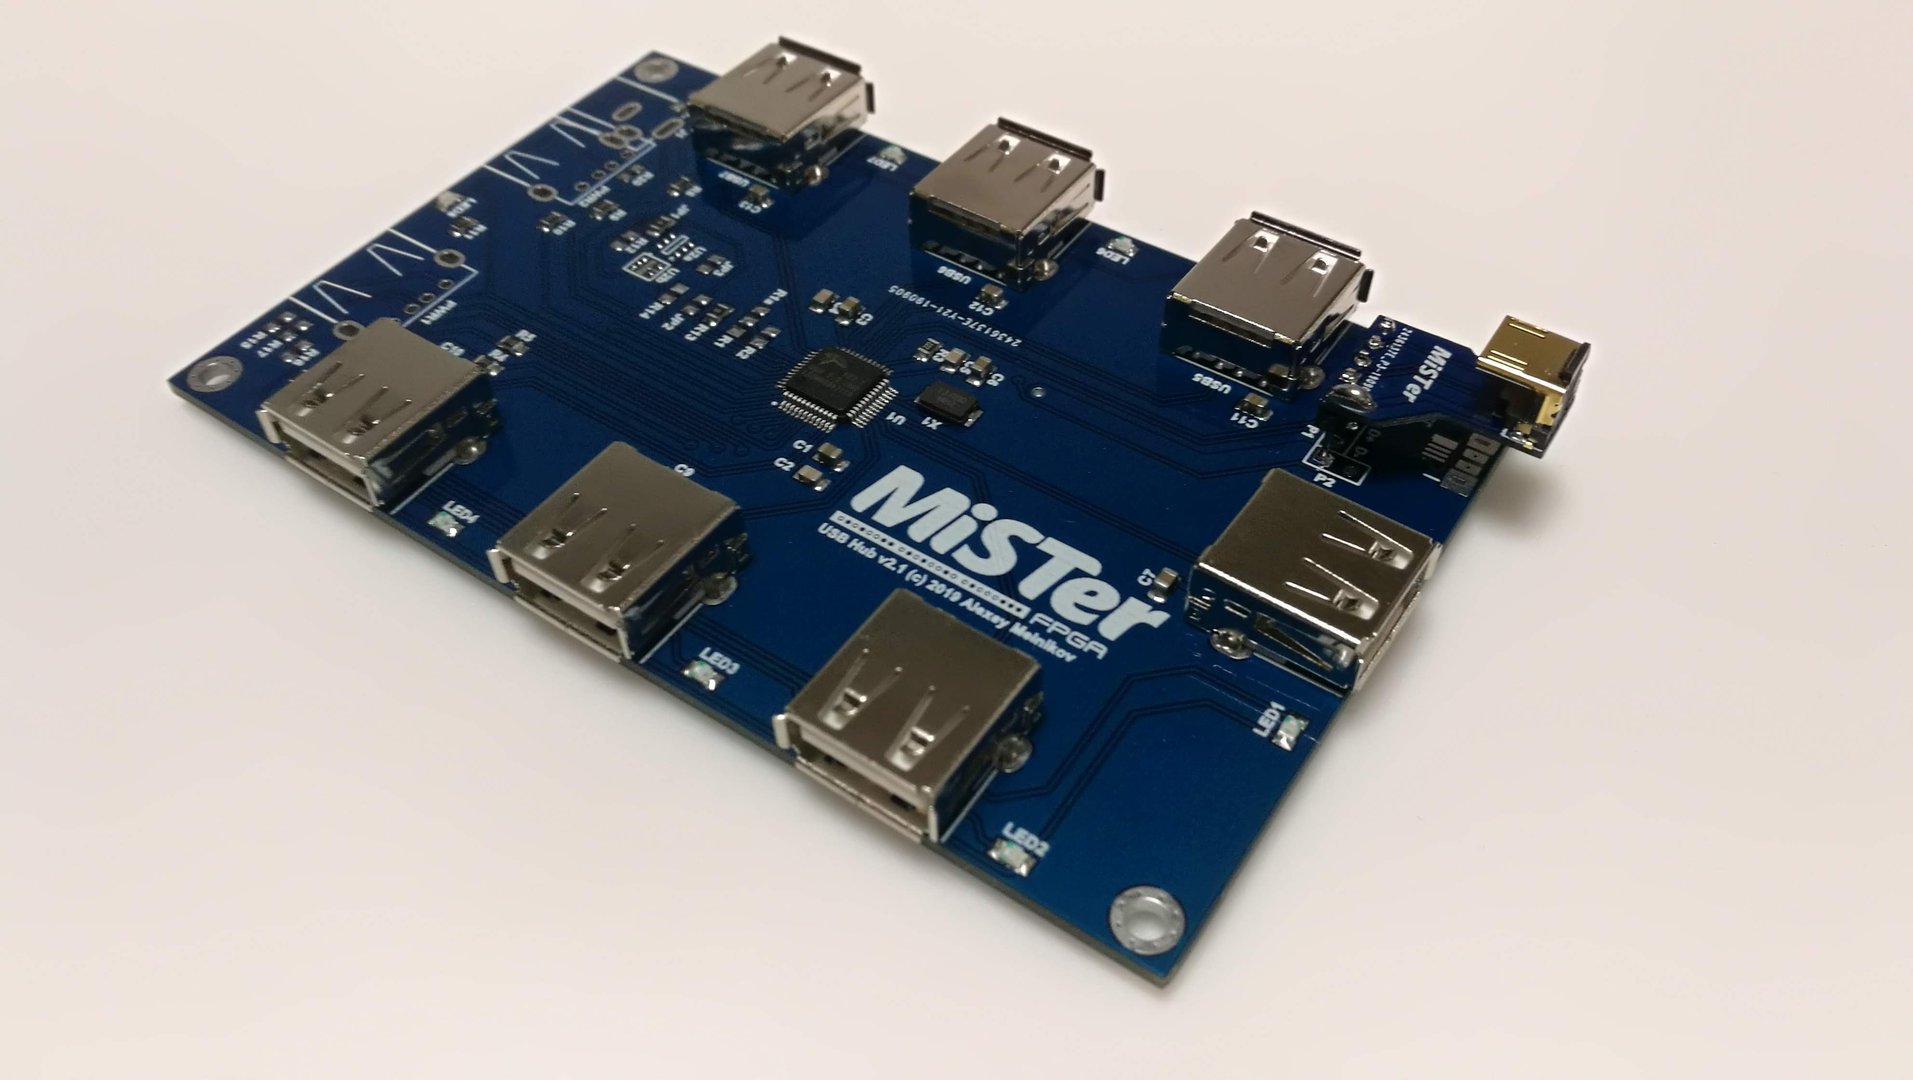 sabio apodo Brote USB hub for MiSTER FPGA. - ManuFerHi